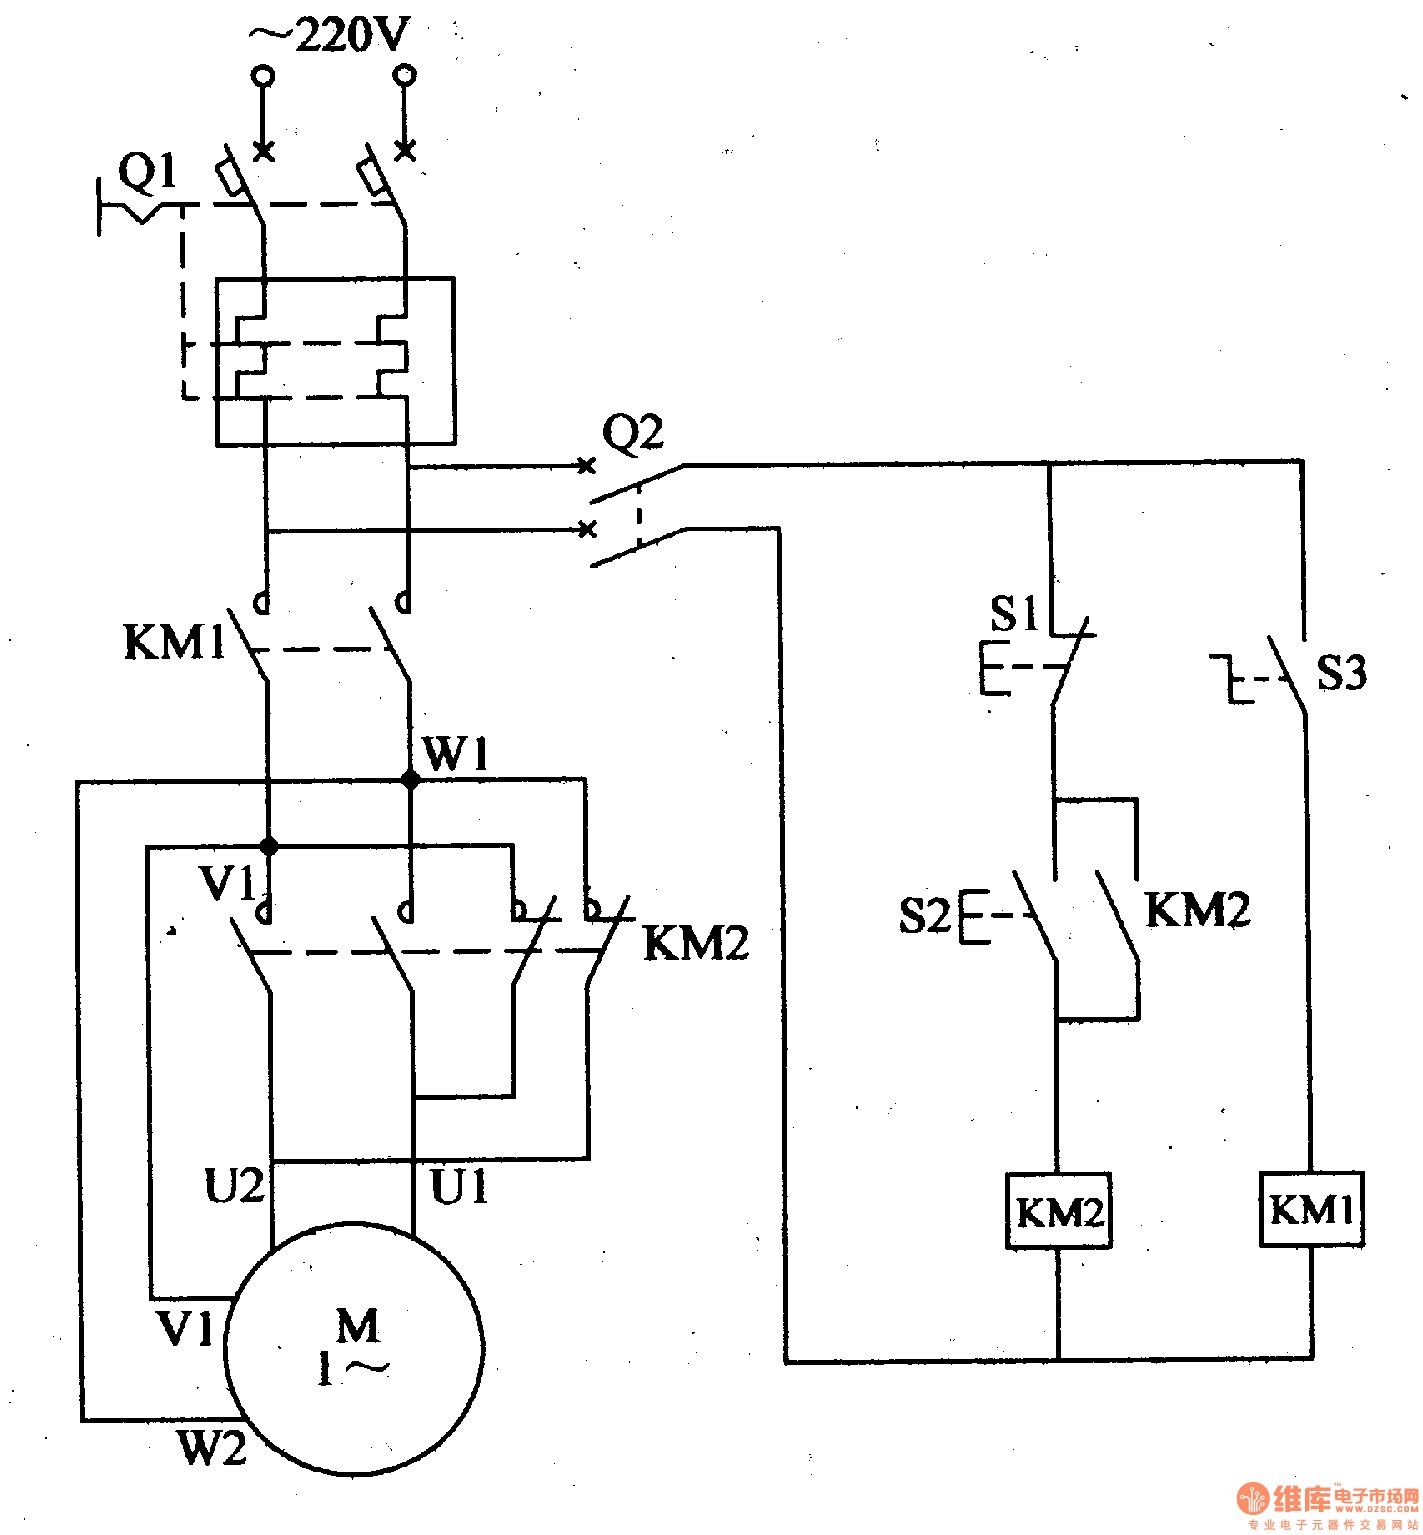 Forward Reverse Wiring Diagram Manual Refrence Single Phase forward Reverse Starter Circuit Diagram Motor